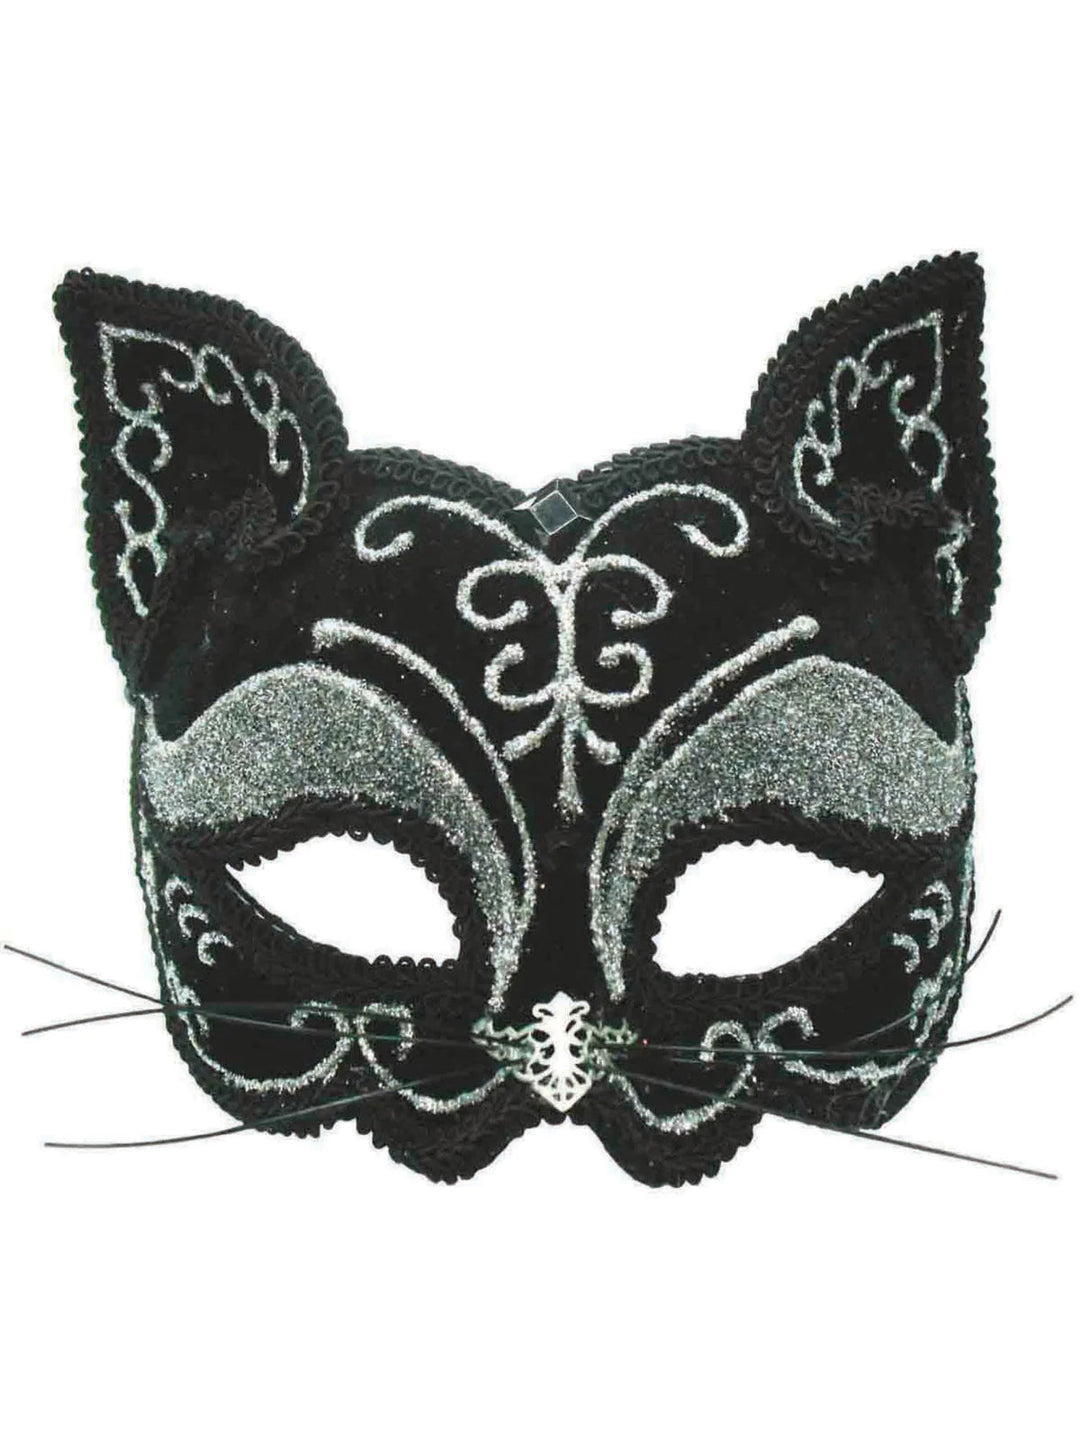 Black Cat Mask Decorative Masquerade Feline